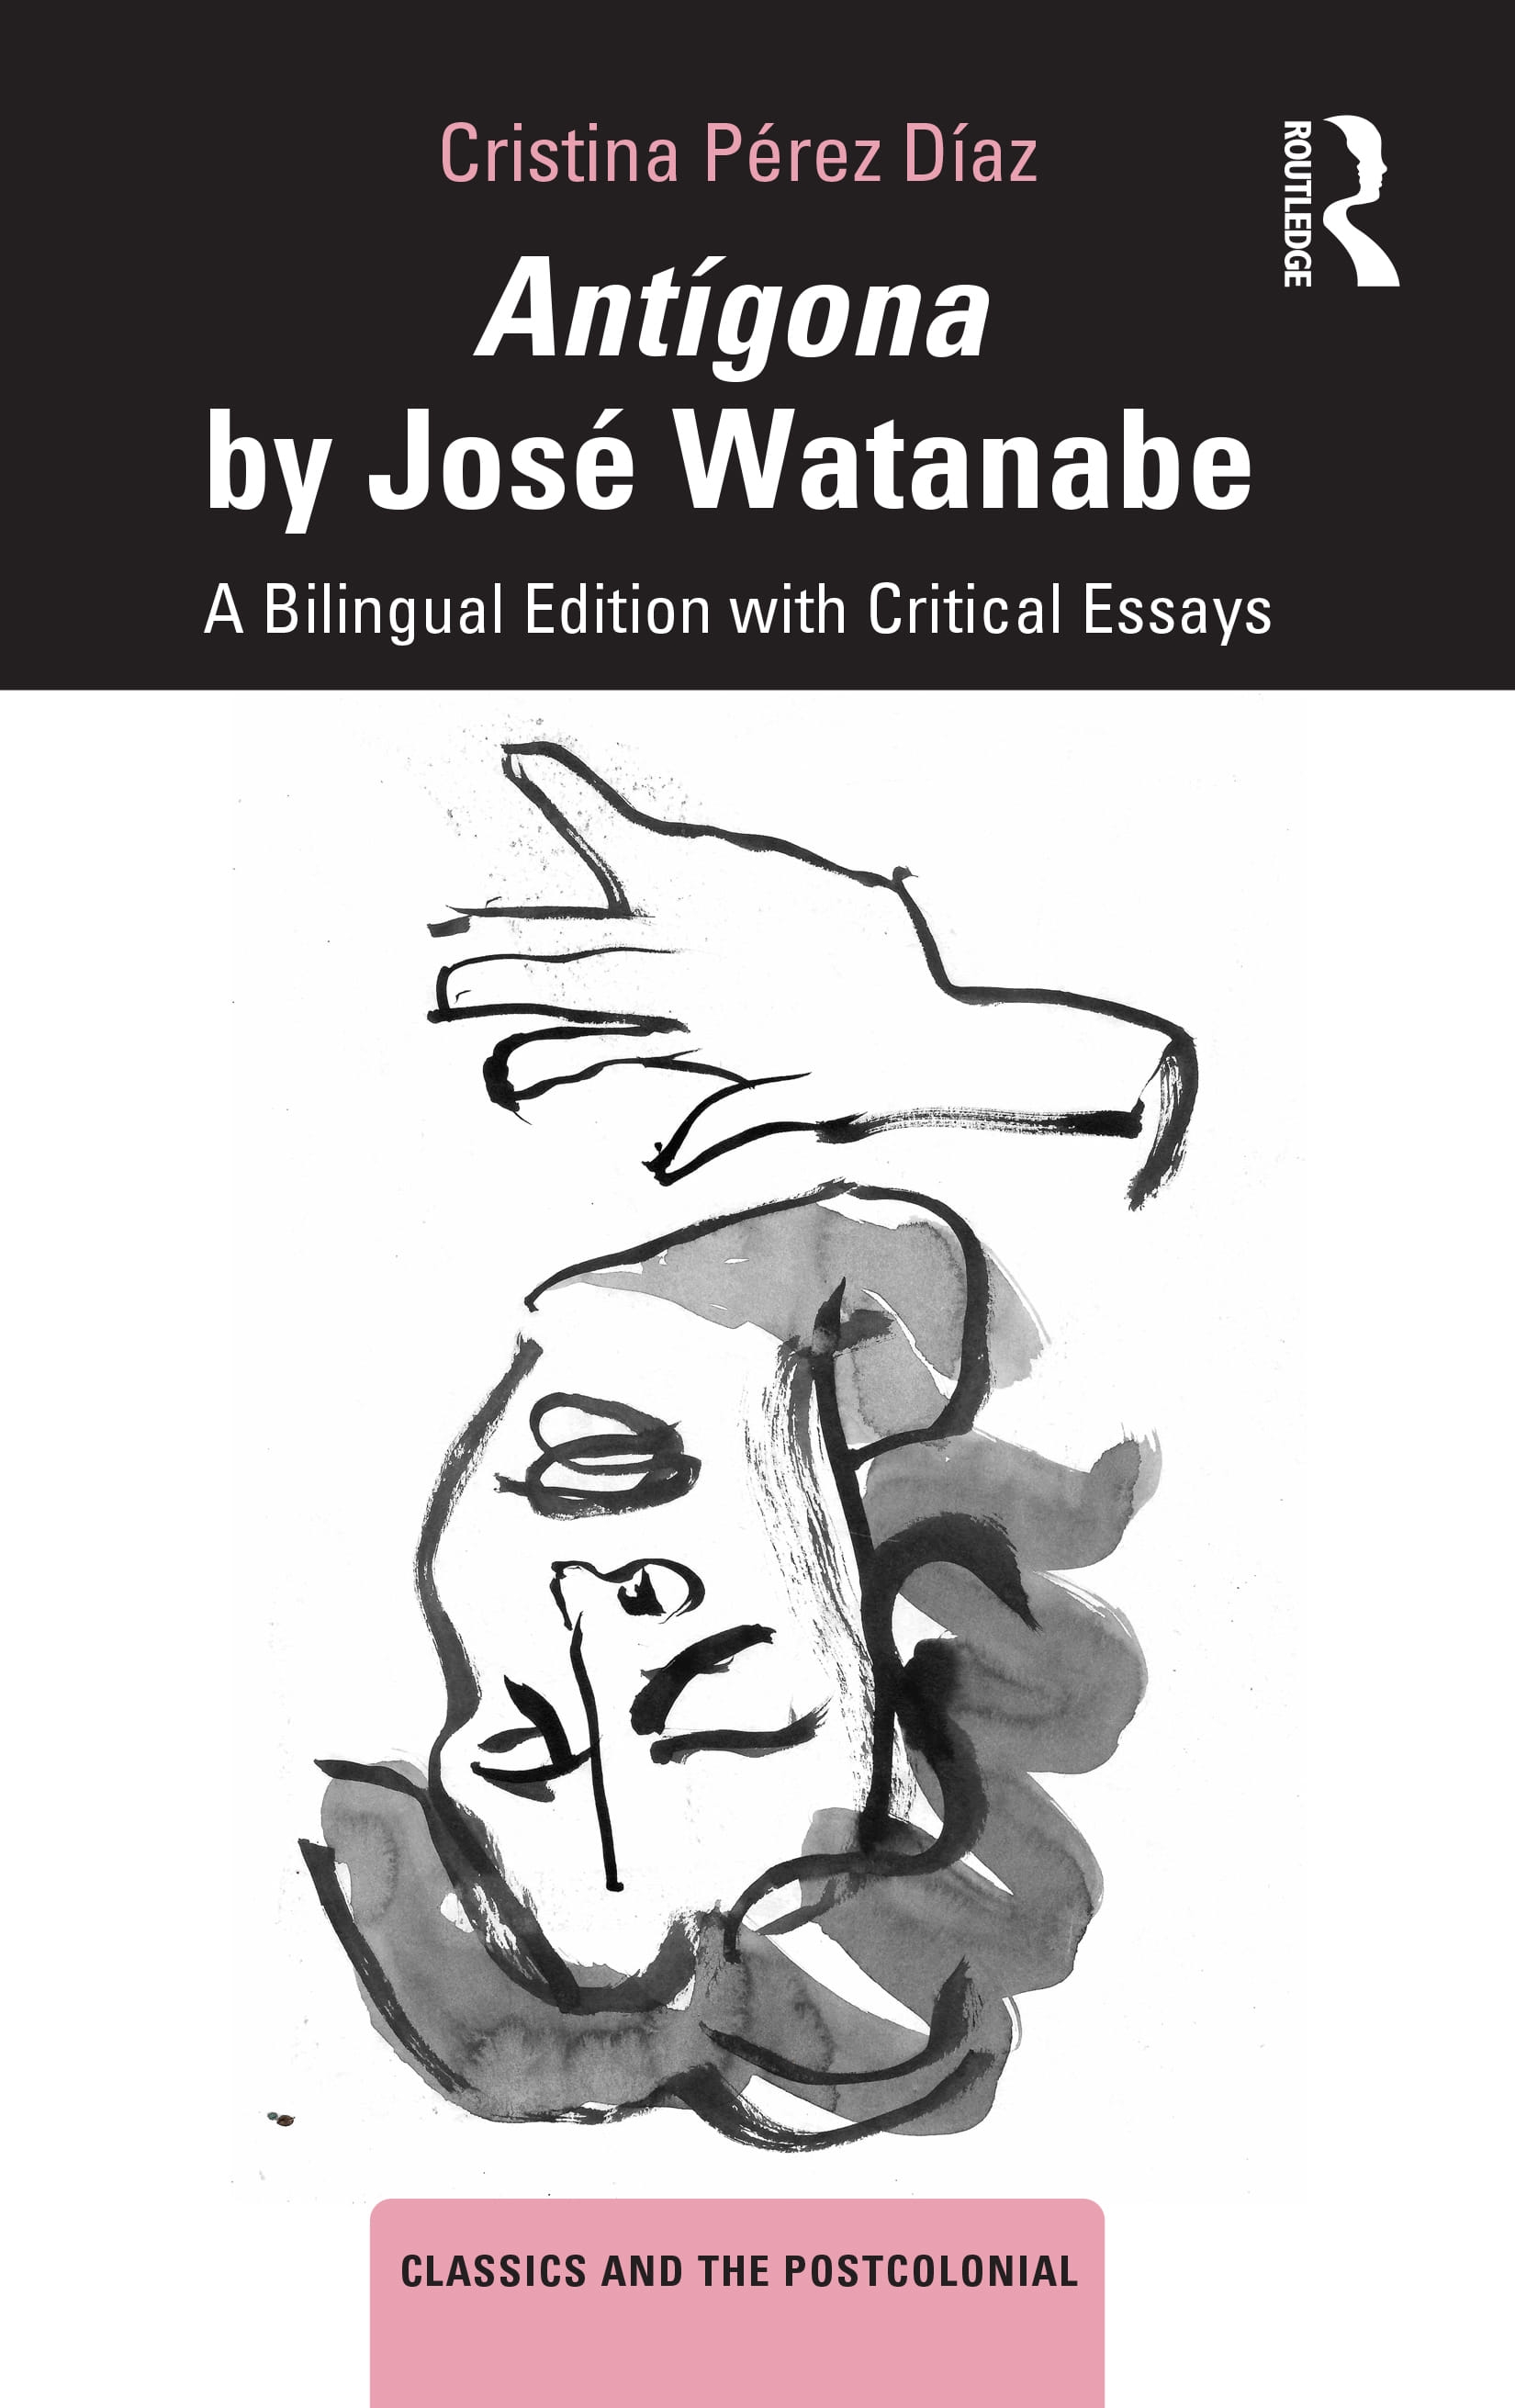 Antígona by José Watanabe: A Bilingual Edition with Critical Essays